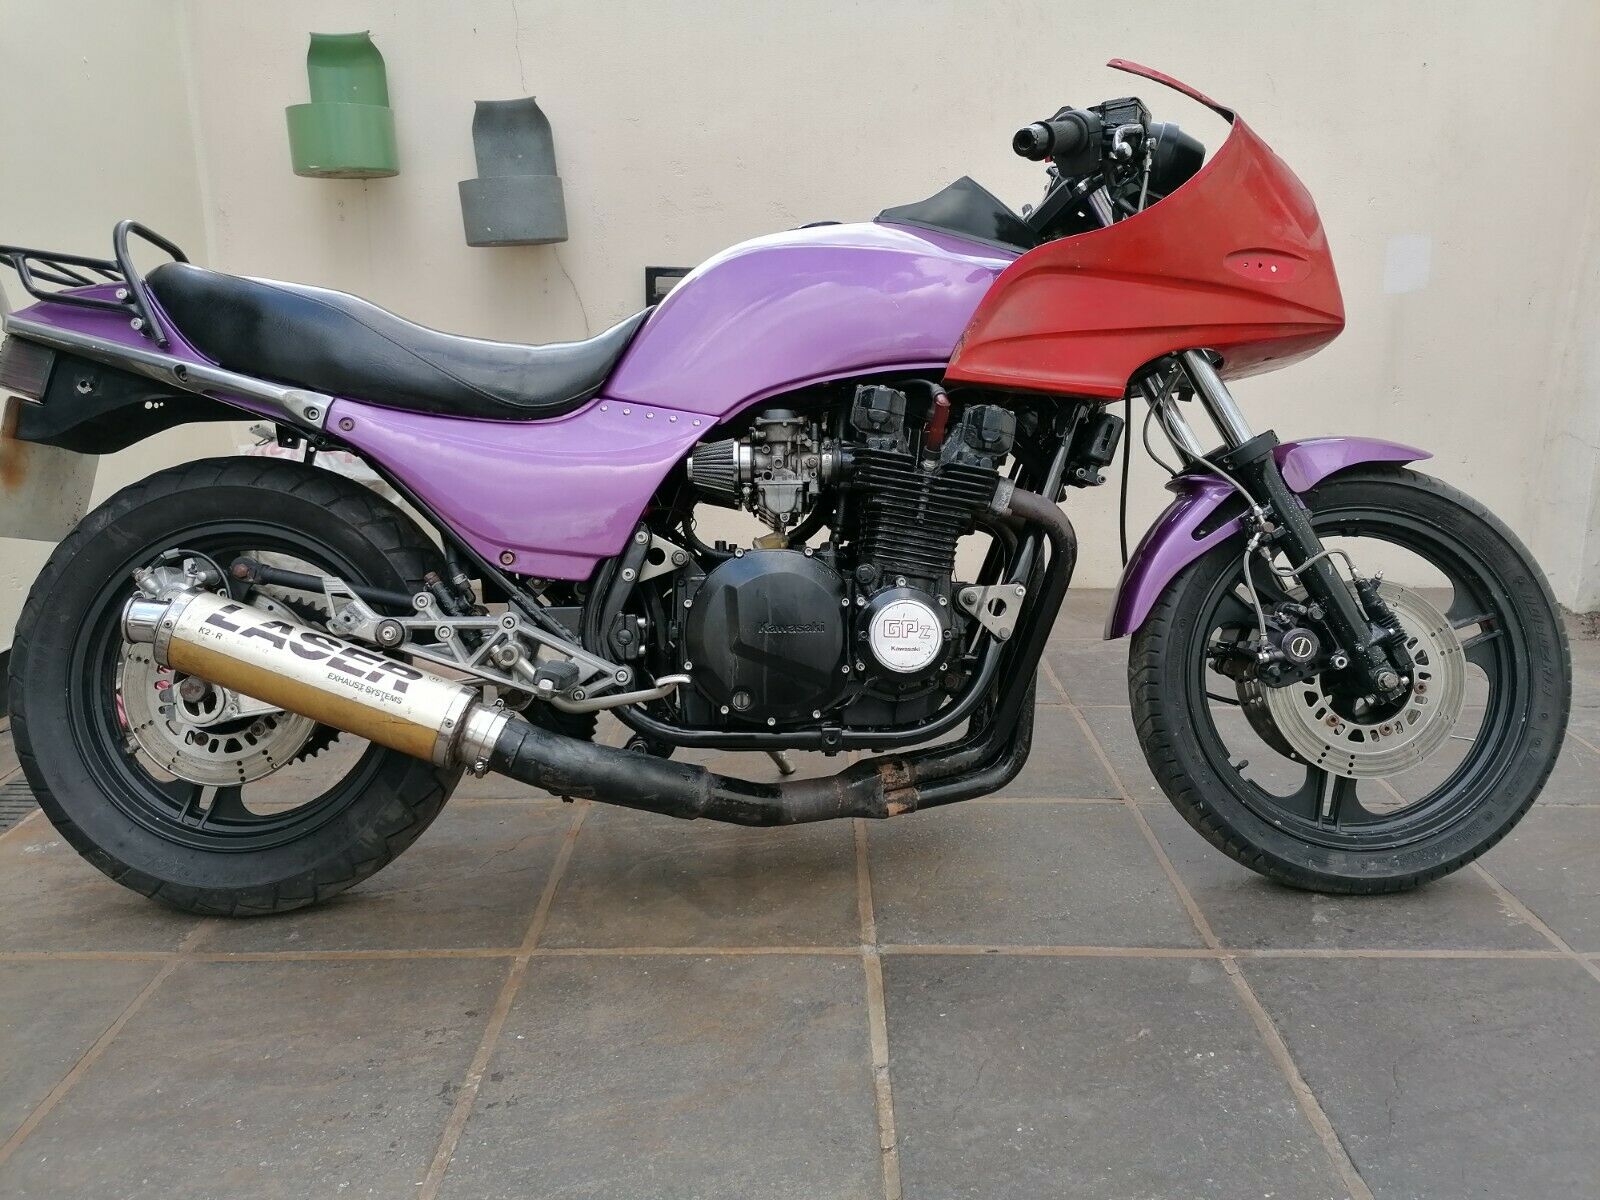 Kawasaki GPZ 1100 A1 Unitrack Classic bike project for sale